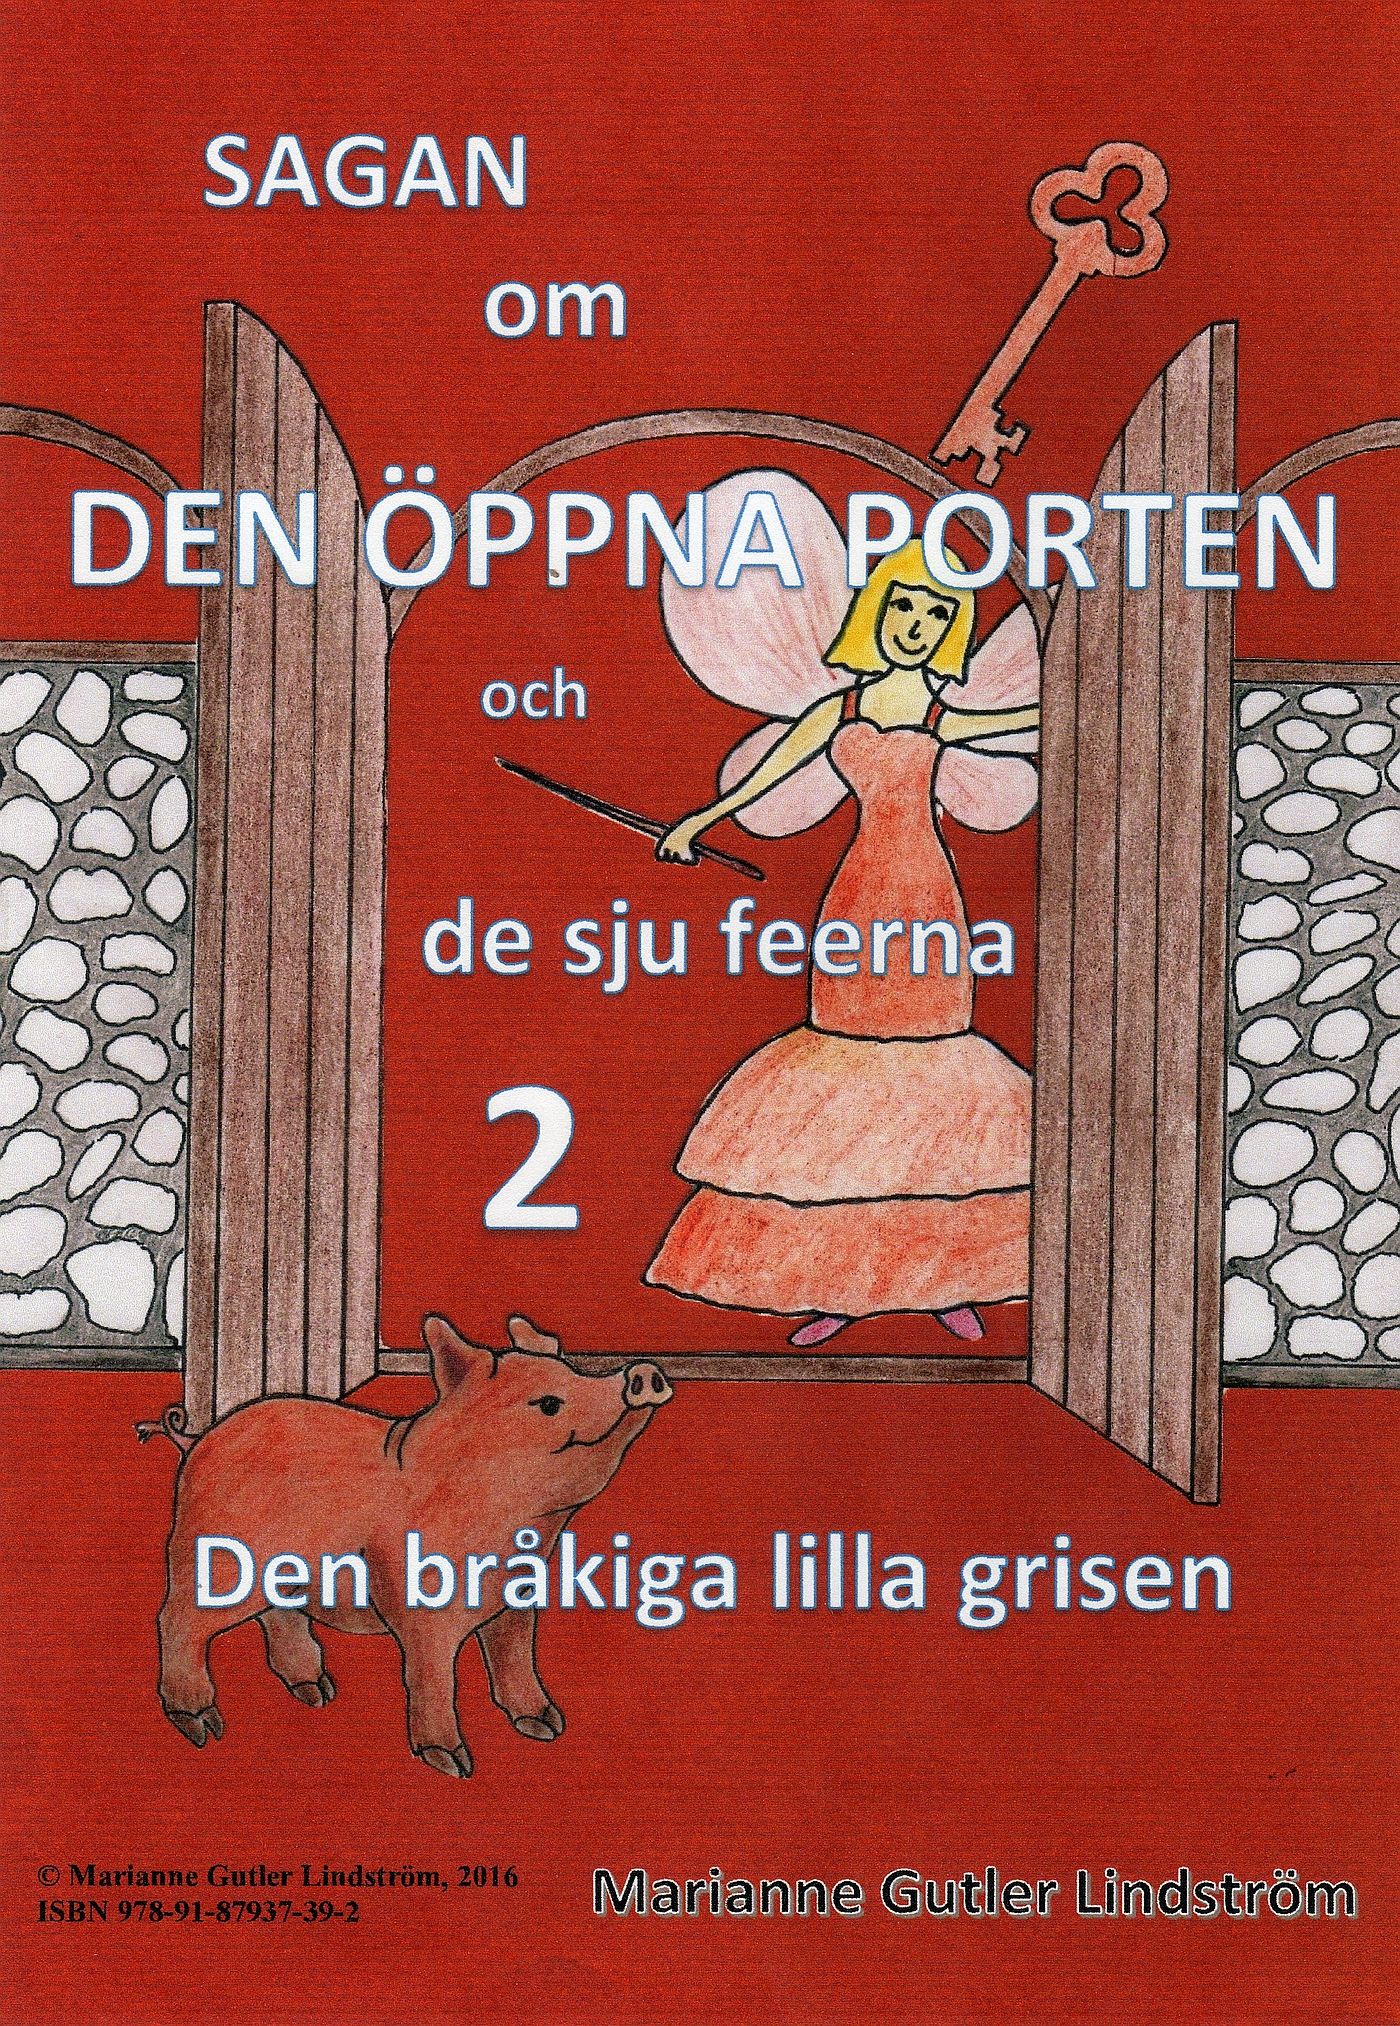 Sagan om den öppna porten 2. Den bråkiga lilla grisen, eBook by Marianne Gutler Lindström